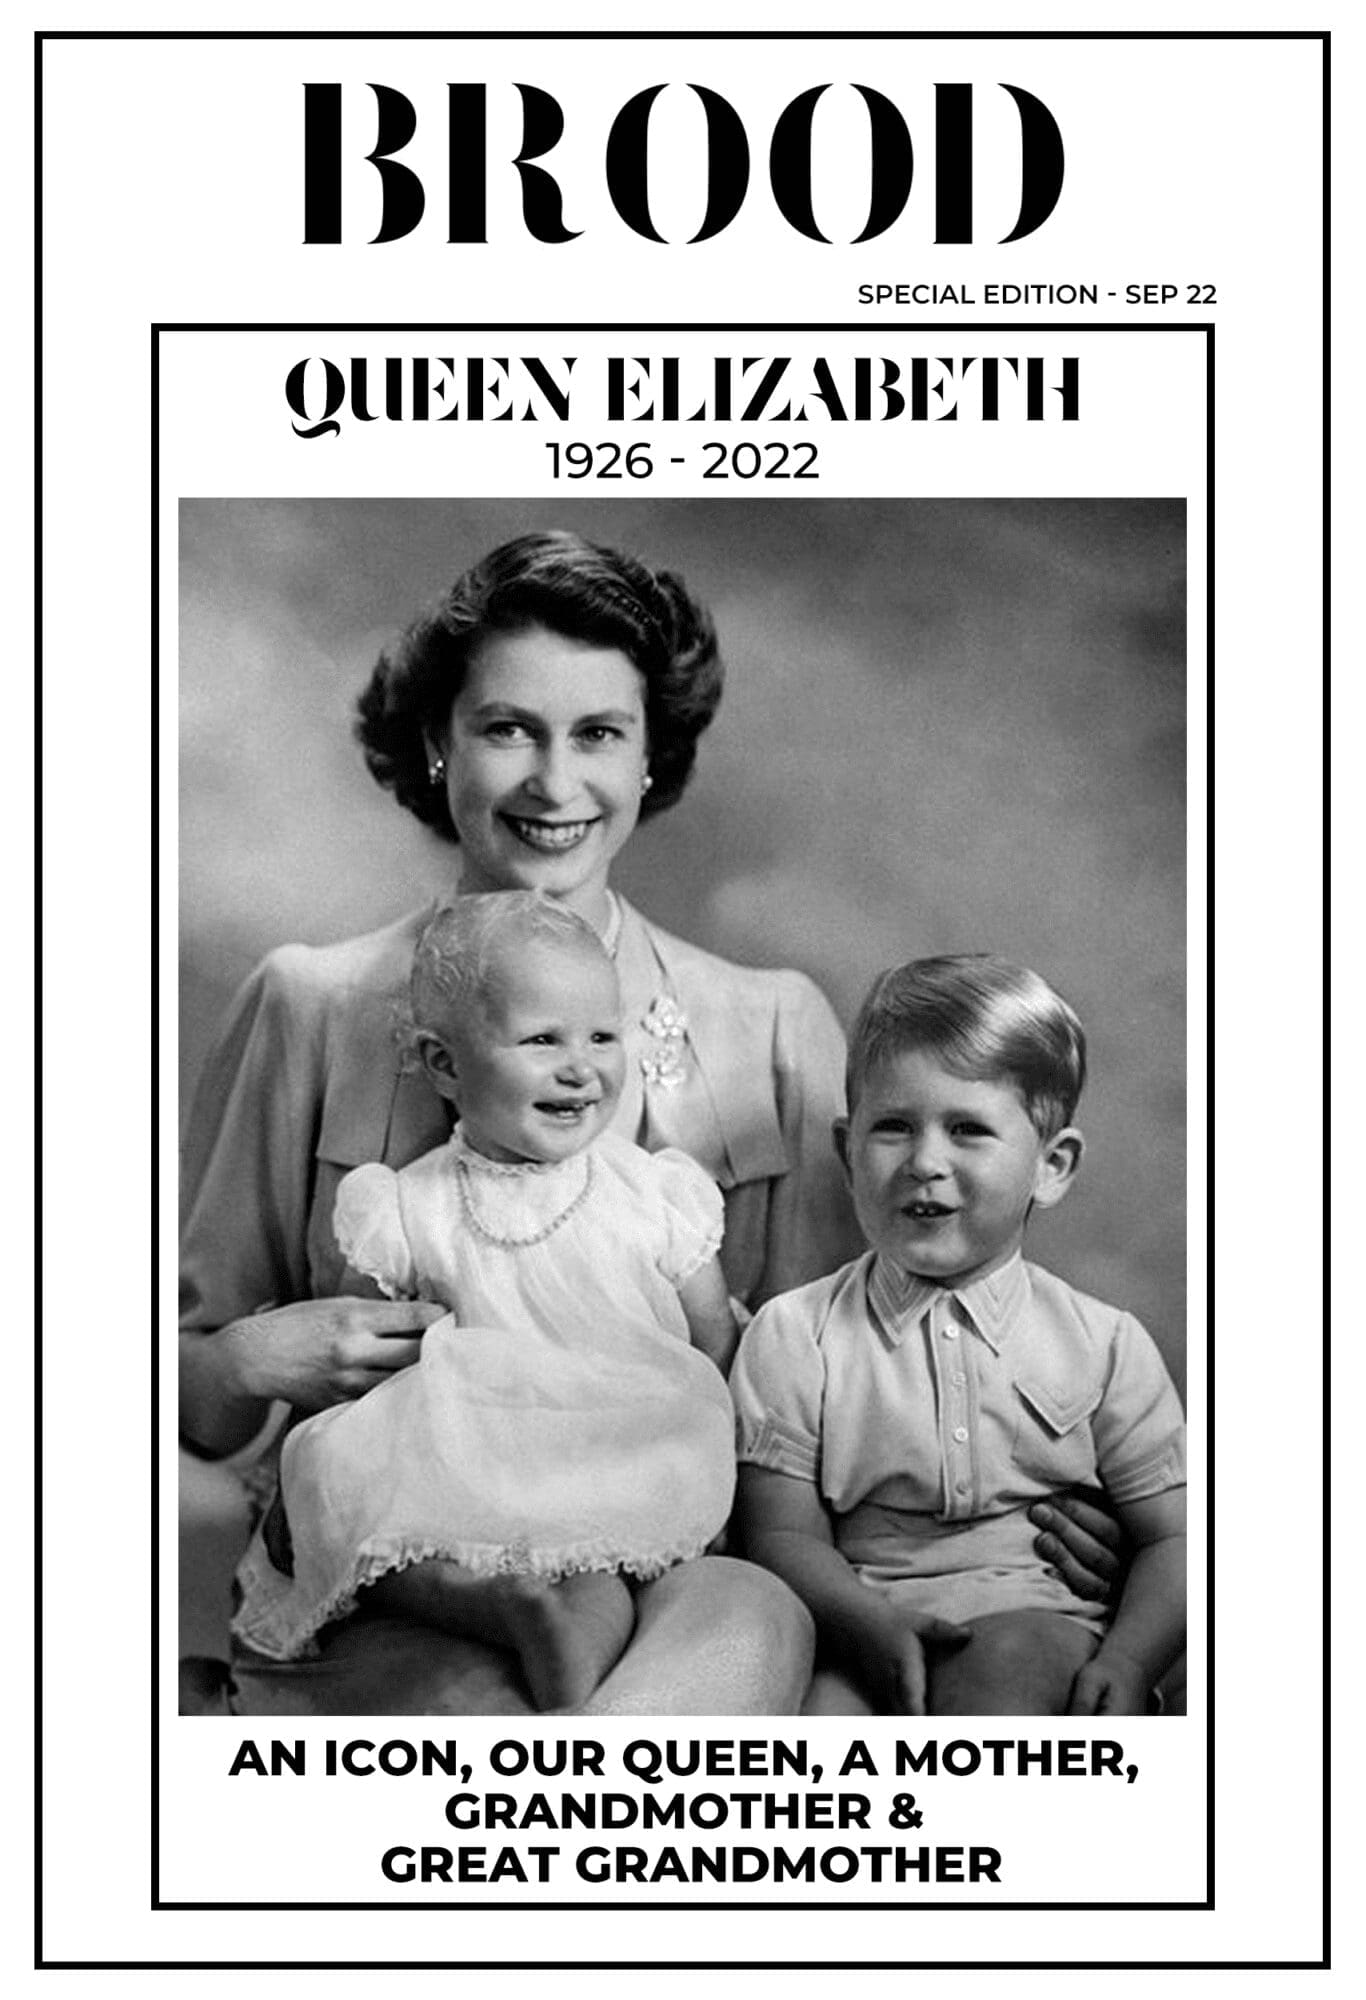 Queen Elizabeth with Children Brood Front Cover